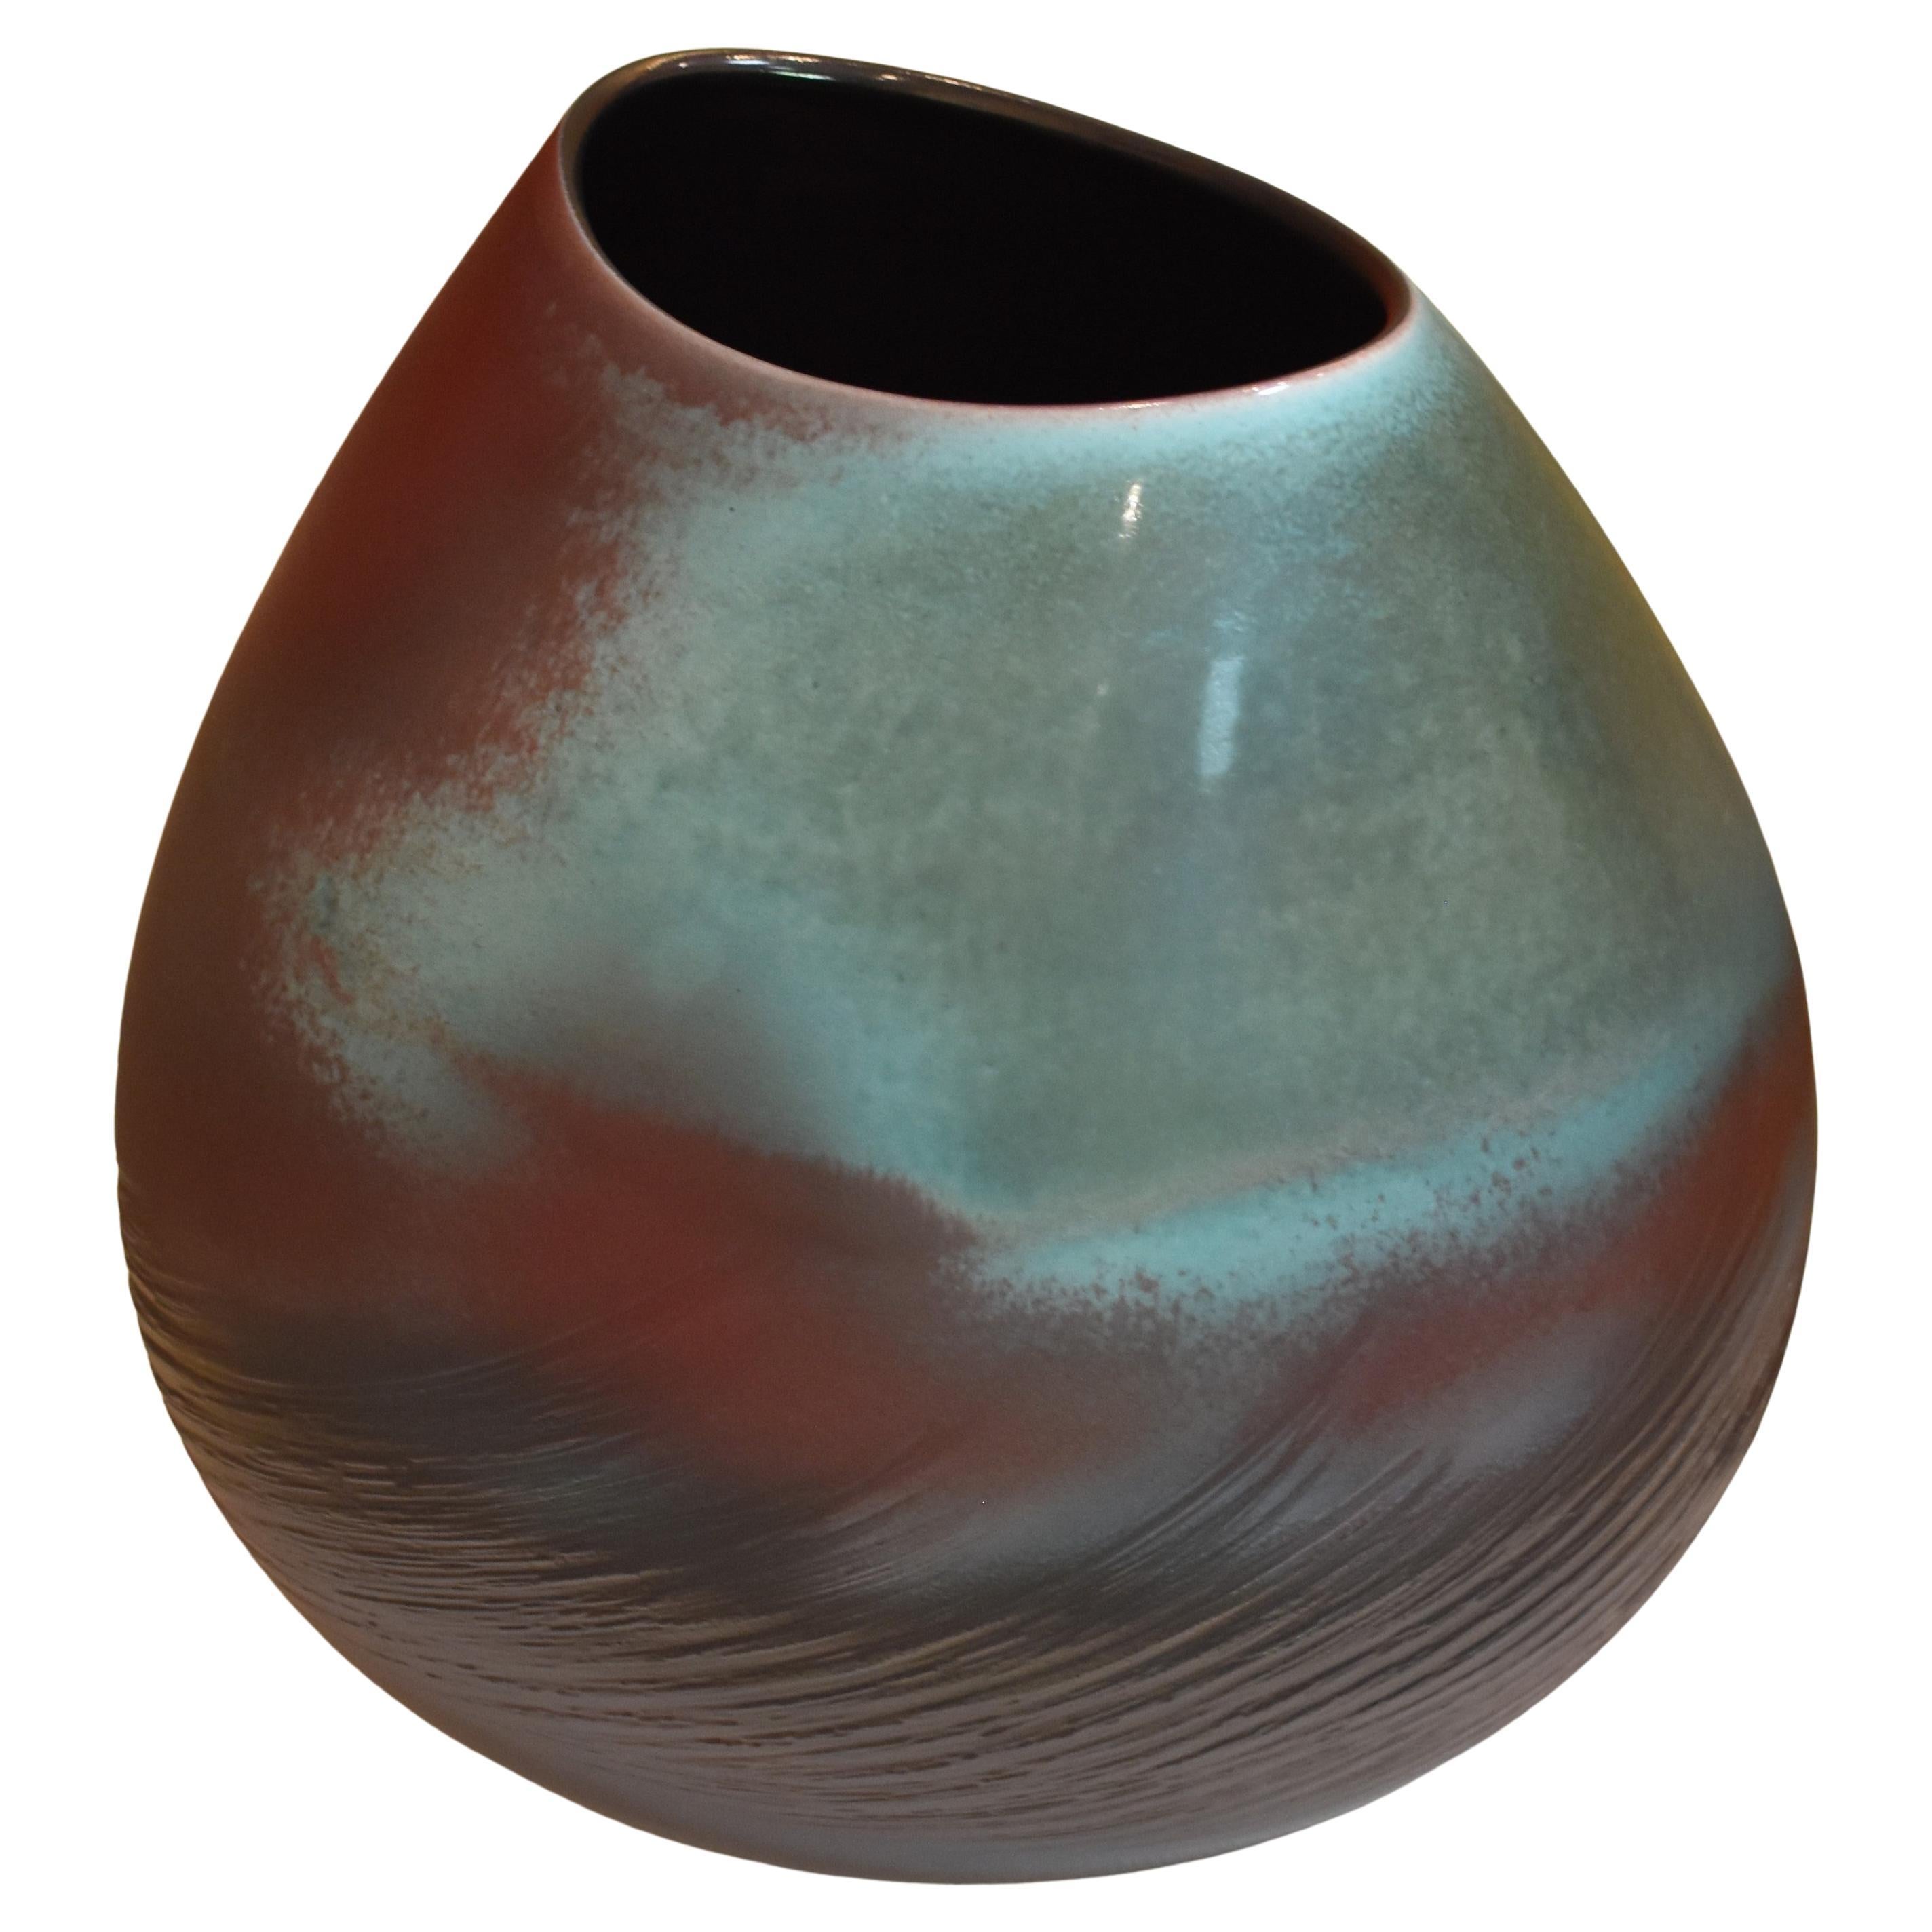 Japanese Contemporary Hand-Glazed Brown Blue Porcelain Vase by Master Artist, 2